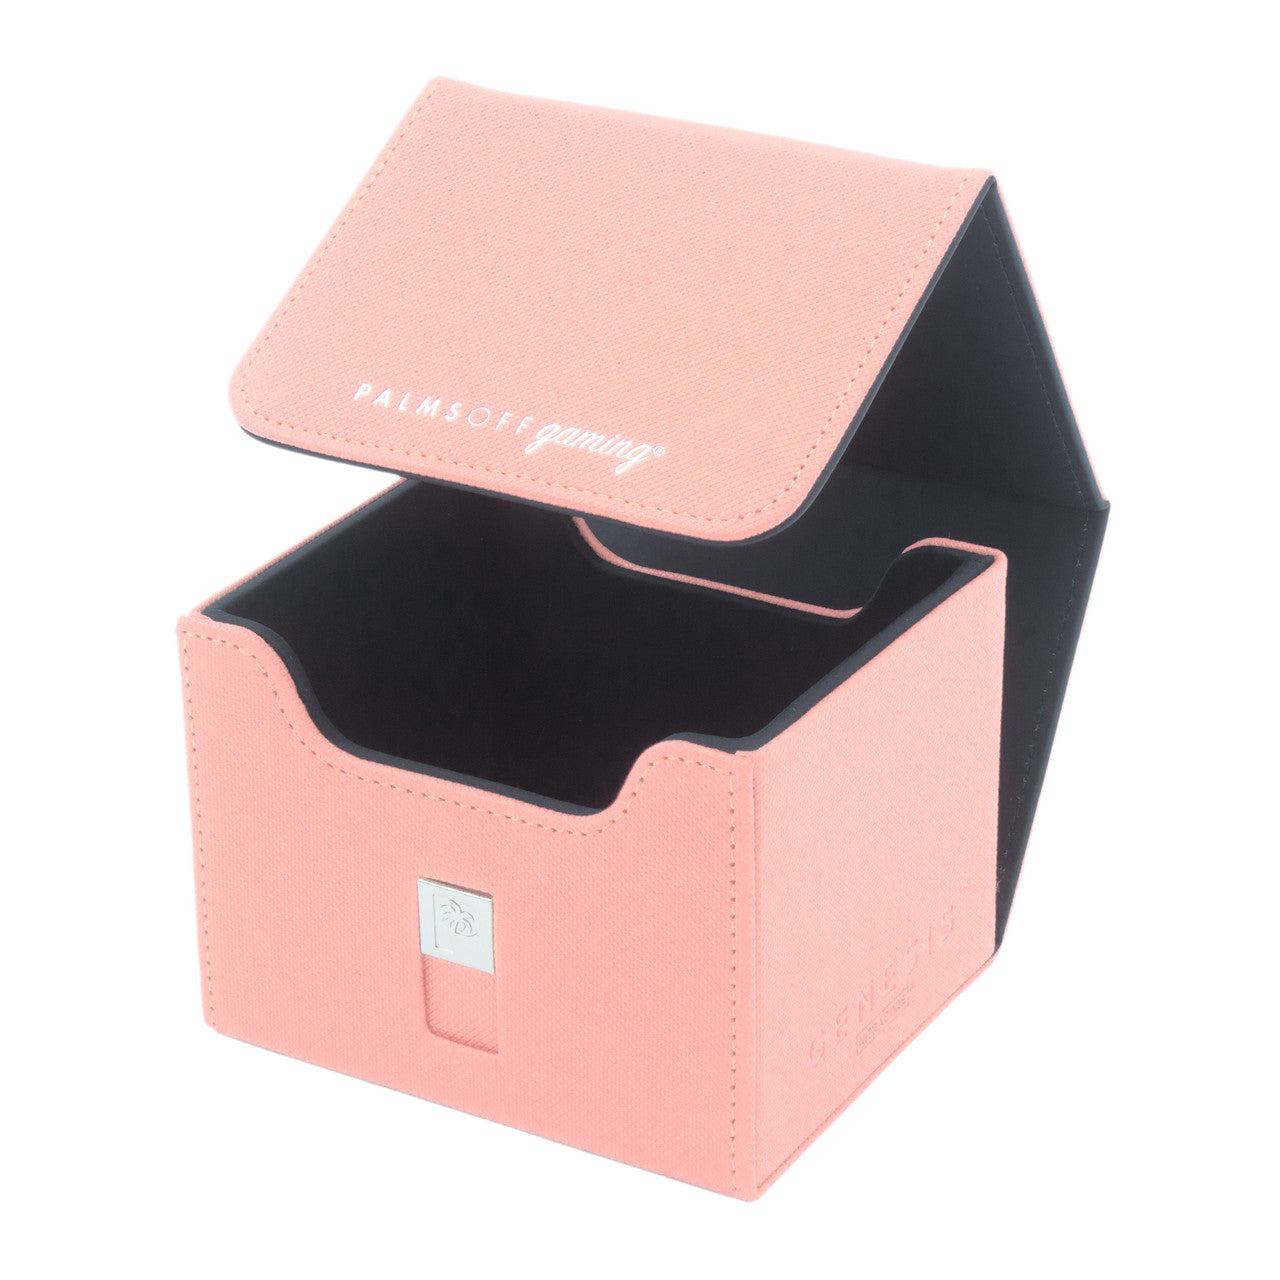 Palms Off Gaming Genesis Deck Box - Pink